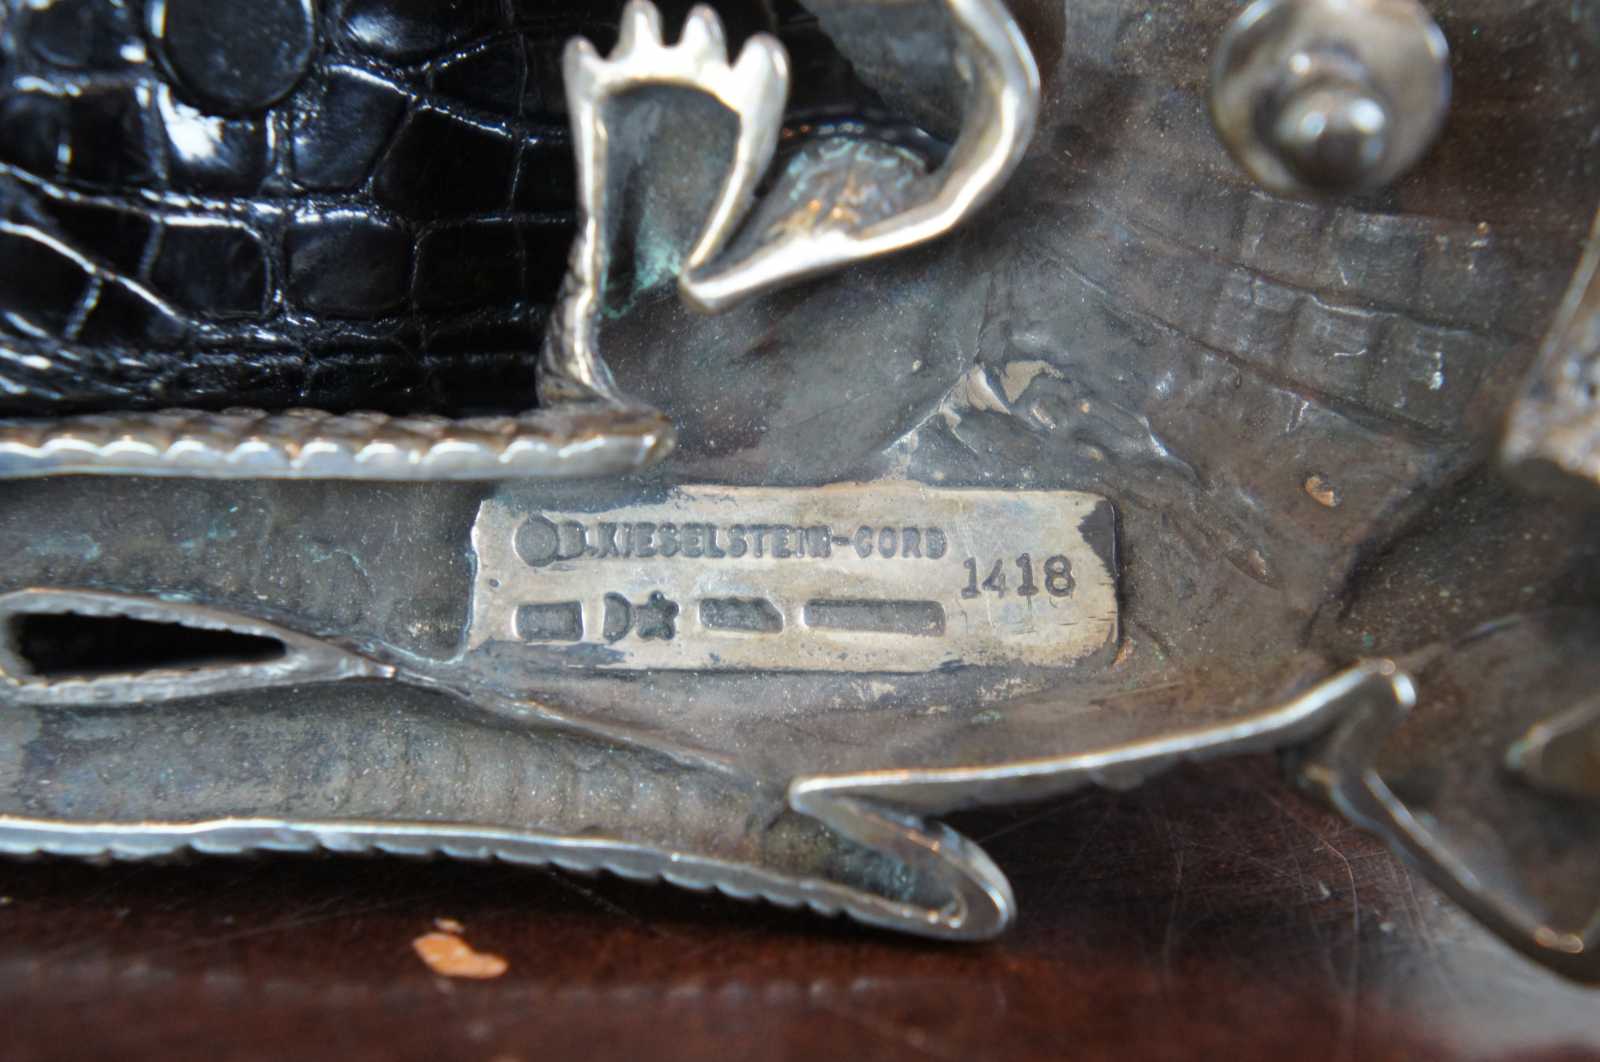 Barry Kieselstein- Cord three-piece alligator leather belt – Deja